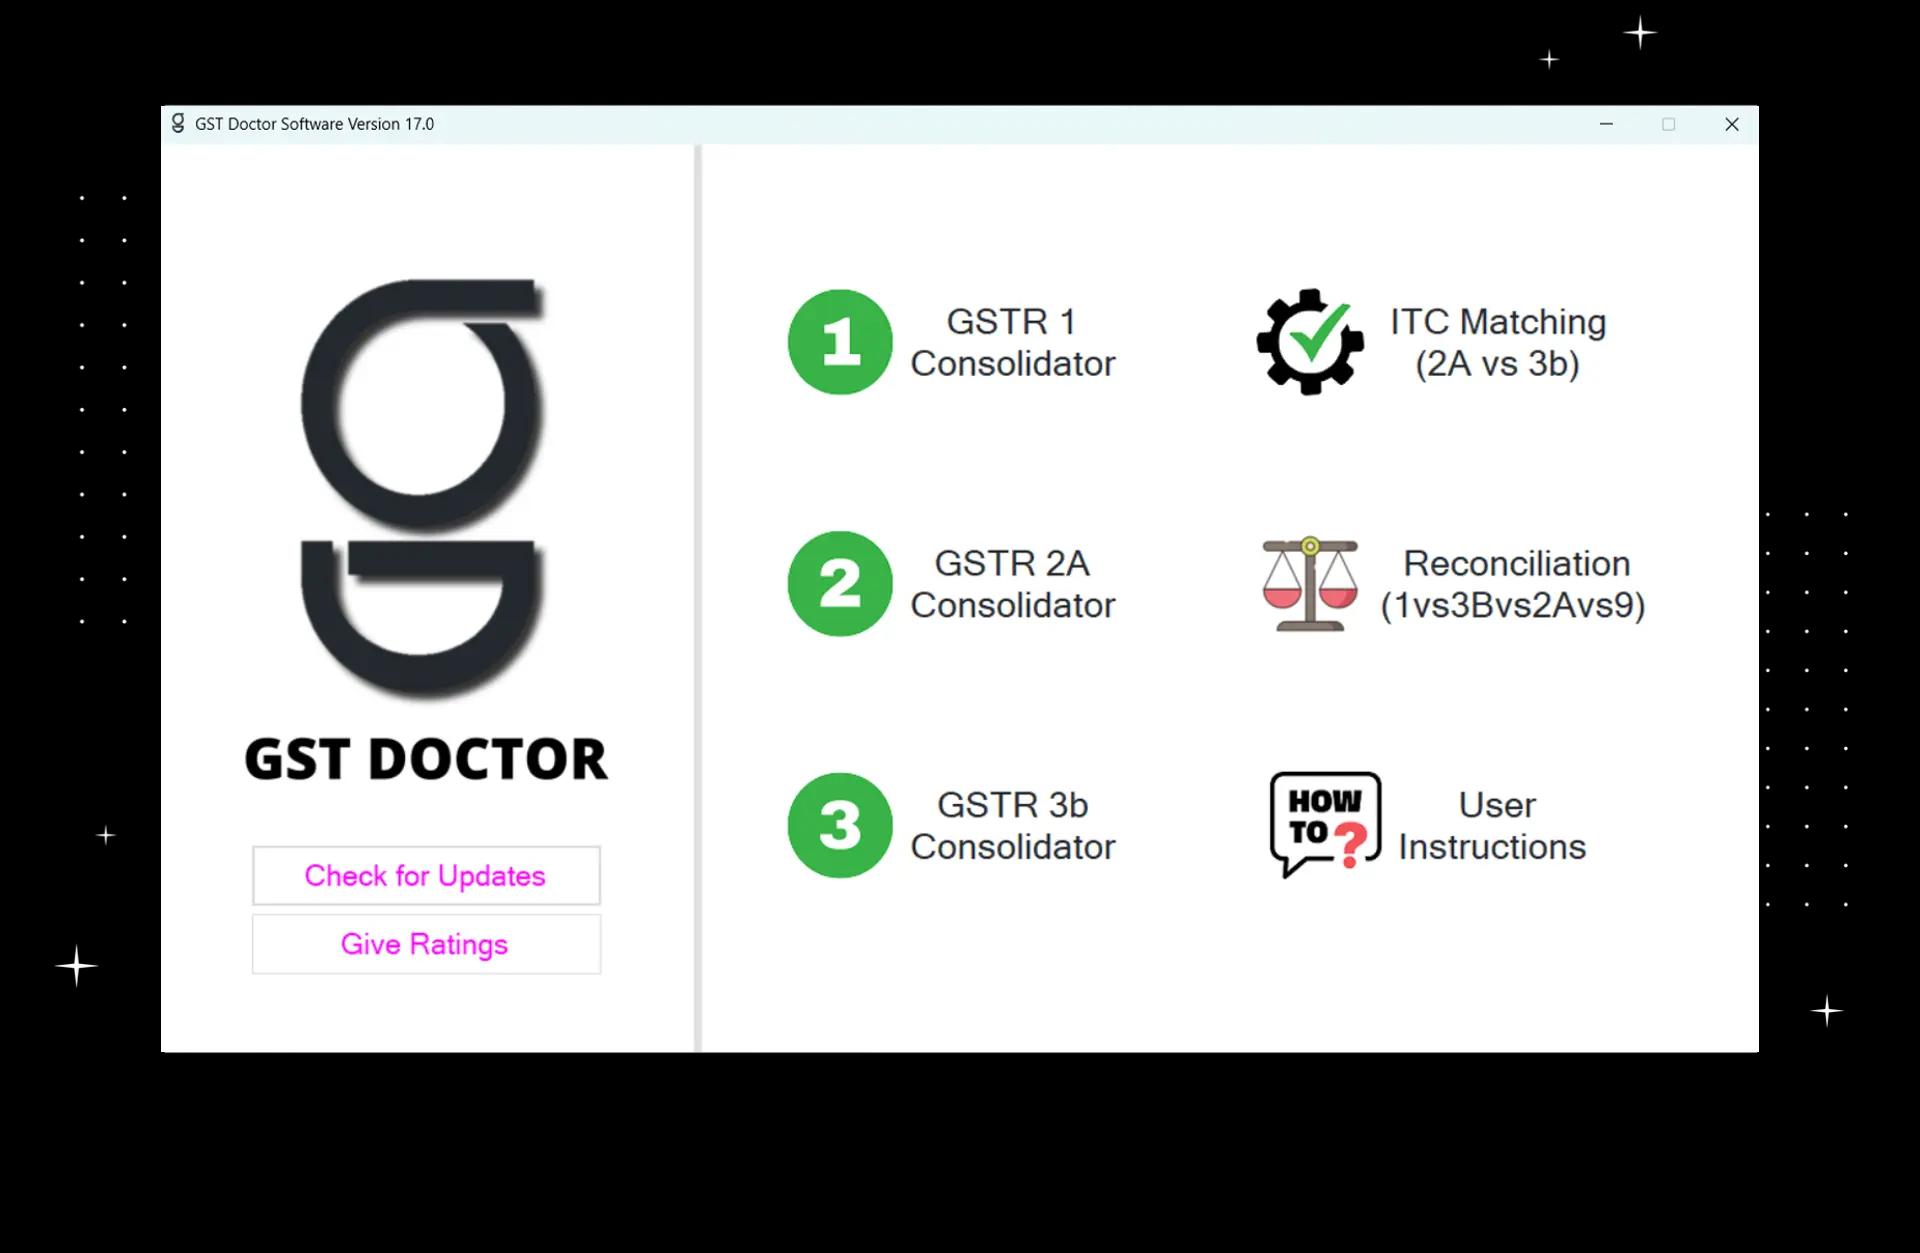 GST Doctor Software